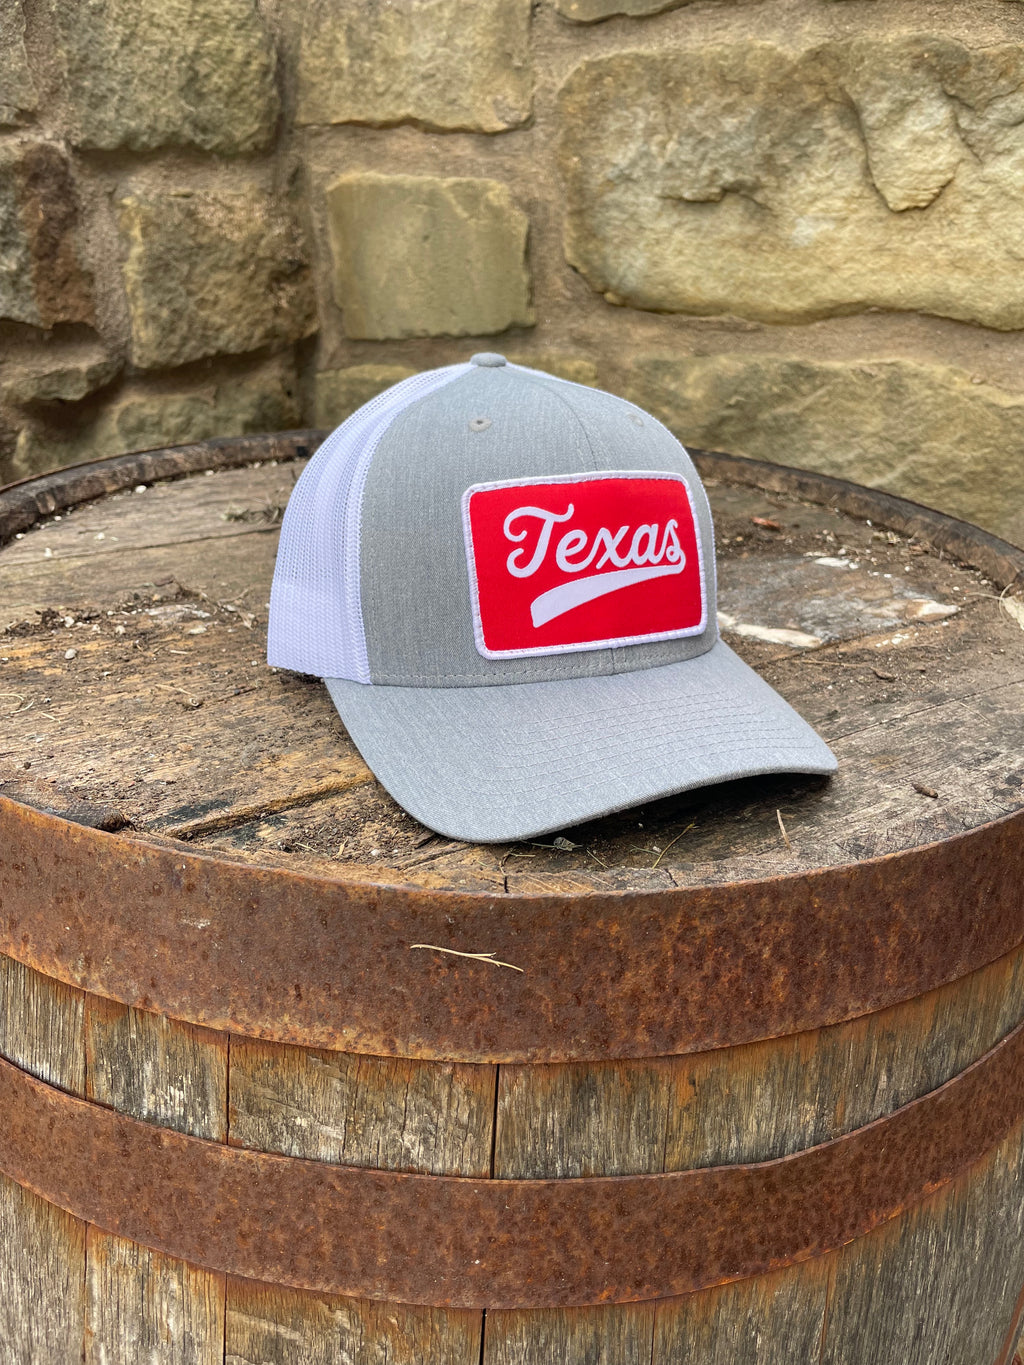 Texas Retro Trucker Hat - Grey/White